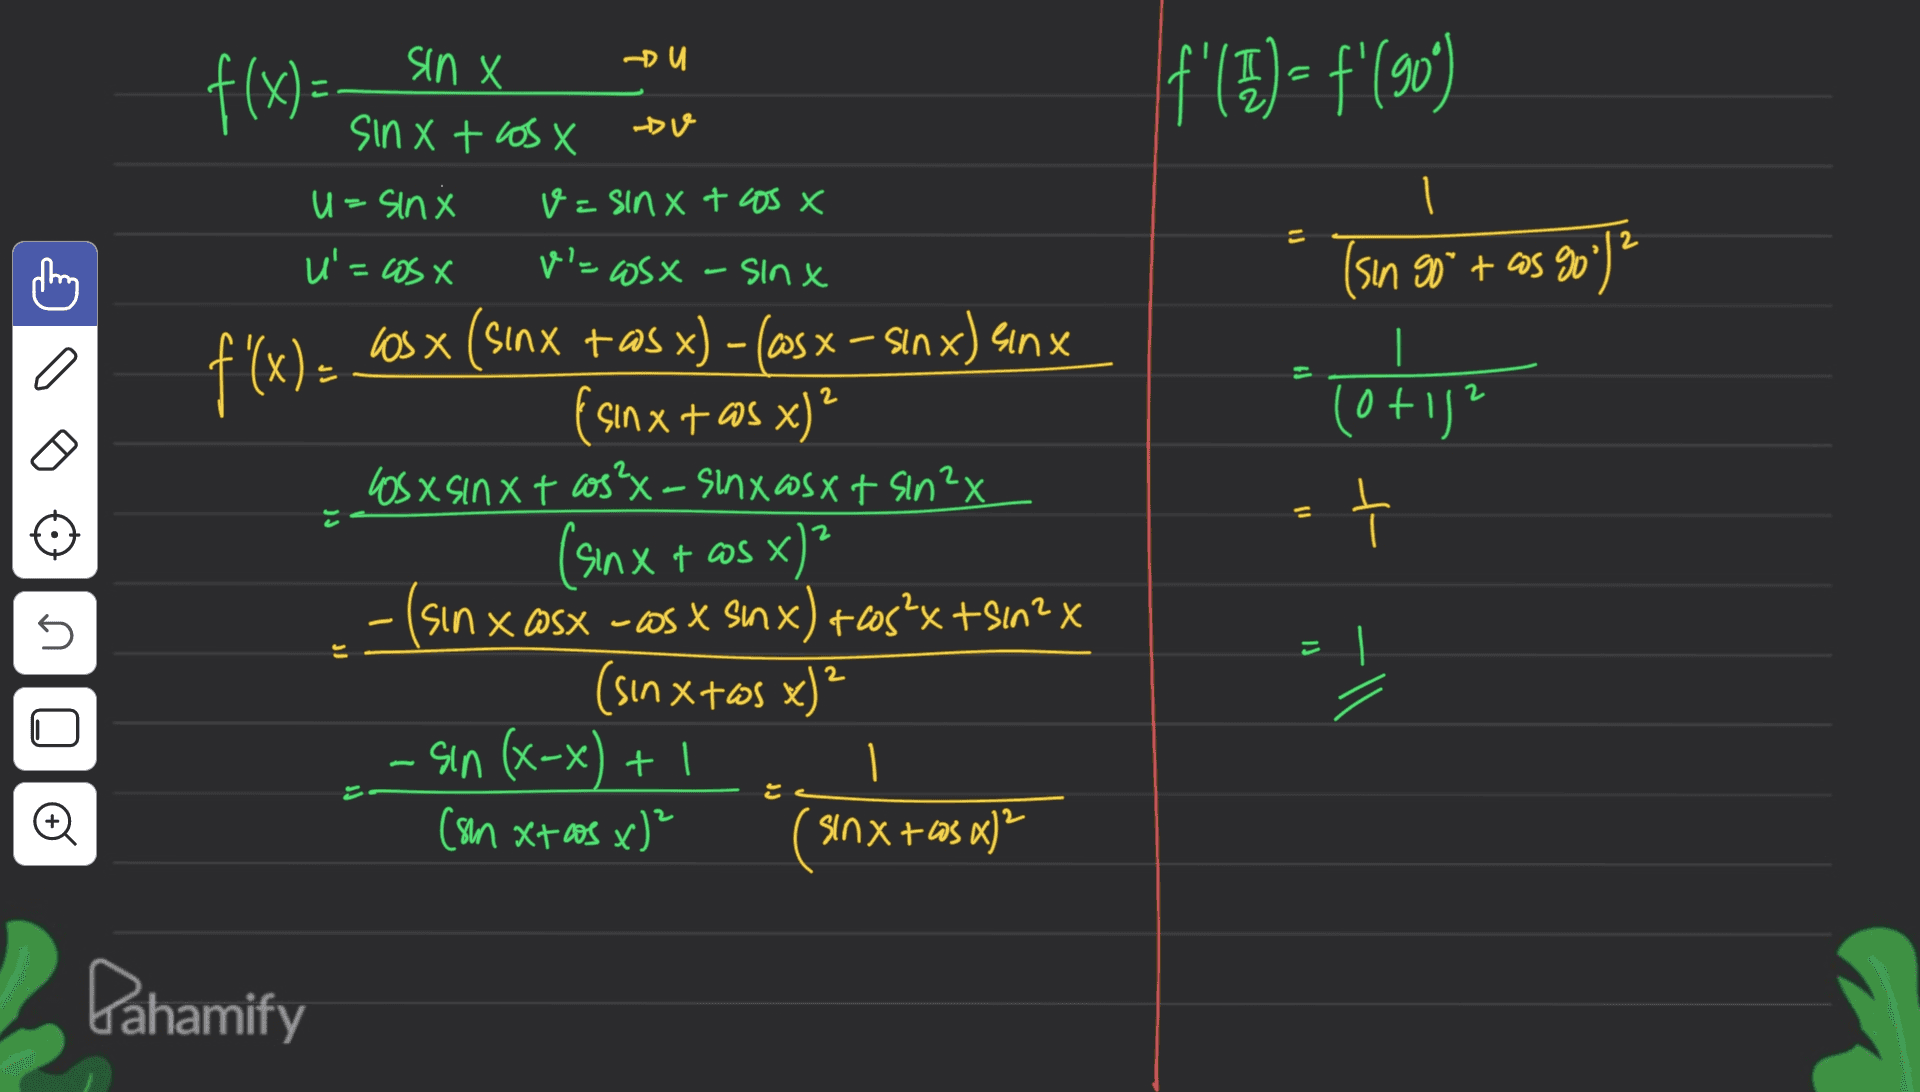 sin X Du f'(E)= f'(90) Dve U 2 1 (sin 90° + cos go")? | (orig? 2 f(x)= sin X + los X usinx v=sinxtos x U=ws X v = wsx - sinx f'(x) losx (sinx + asx) - (as x - sinx) sinx Sin x + as x)? LOS X sinx + cos²x - Sinxosxt sin2x (sin x + @s x)? sin x asx - as X snx) + cos²x tsin2x (sinxtos x)² - sin (x-x)+1 1 (sm xtos x)² sinx + 63x)² n = 2 Pahamify 